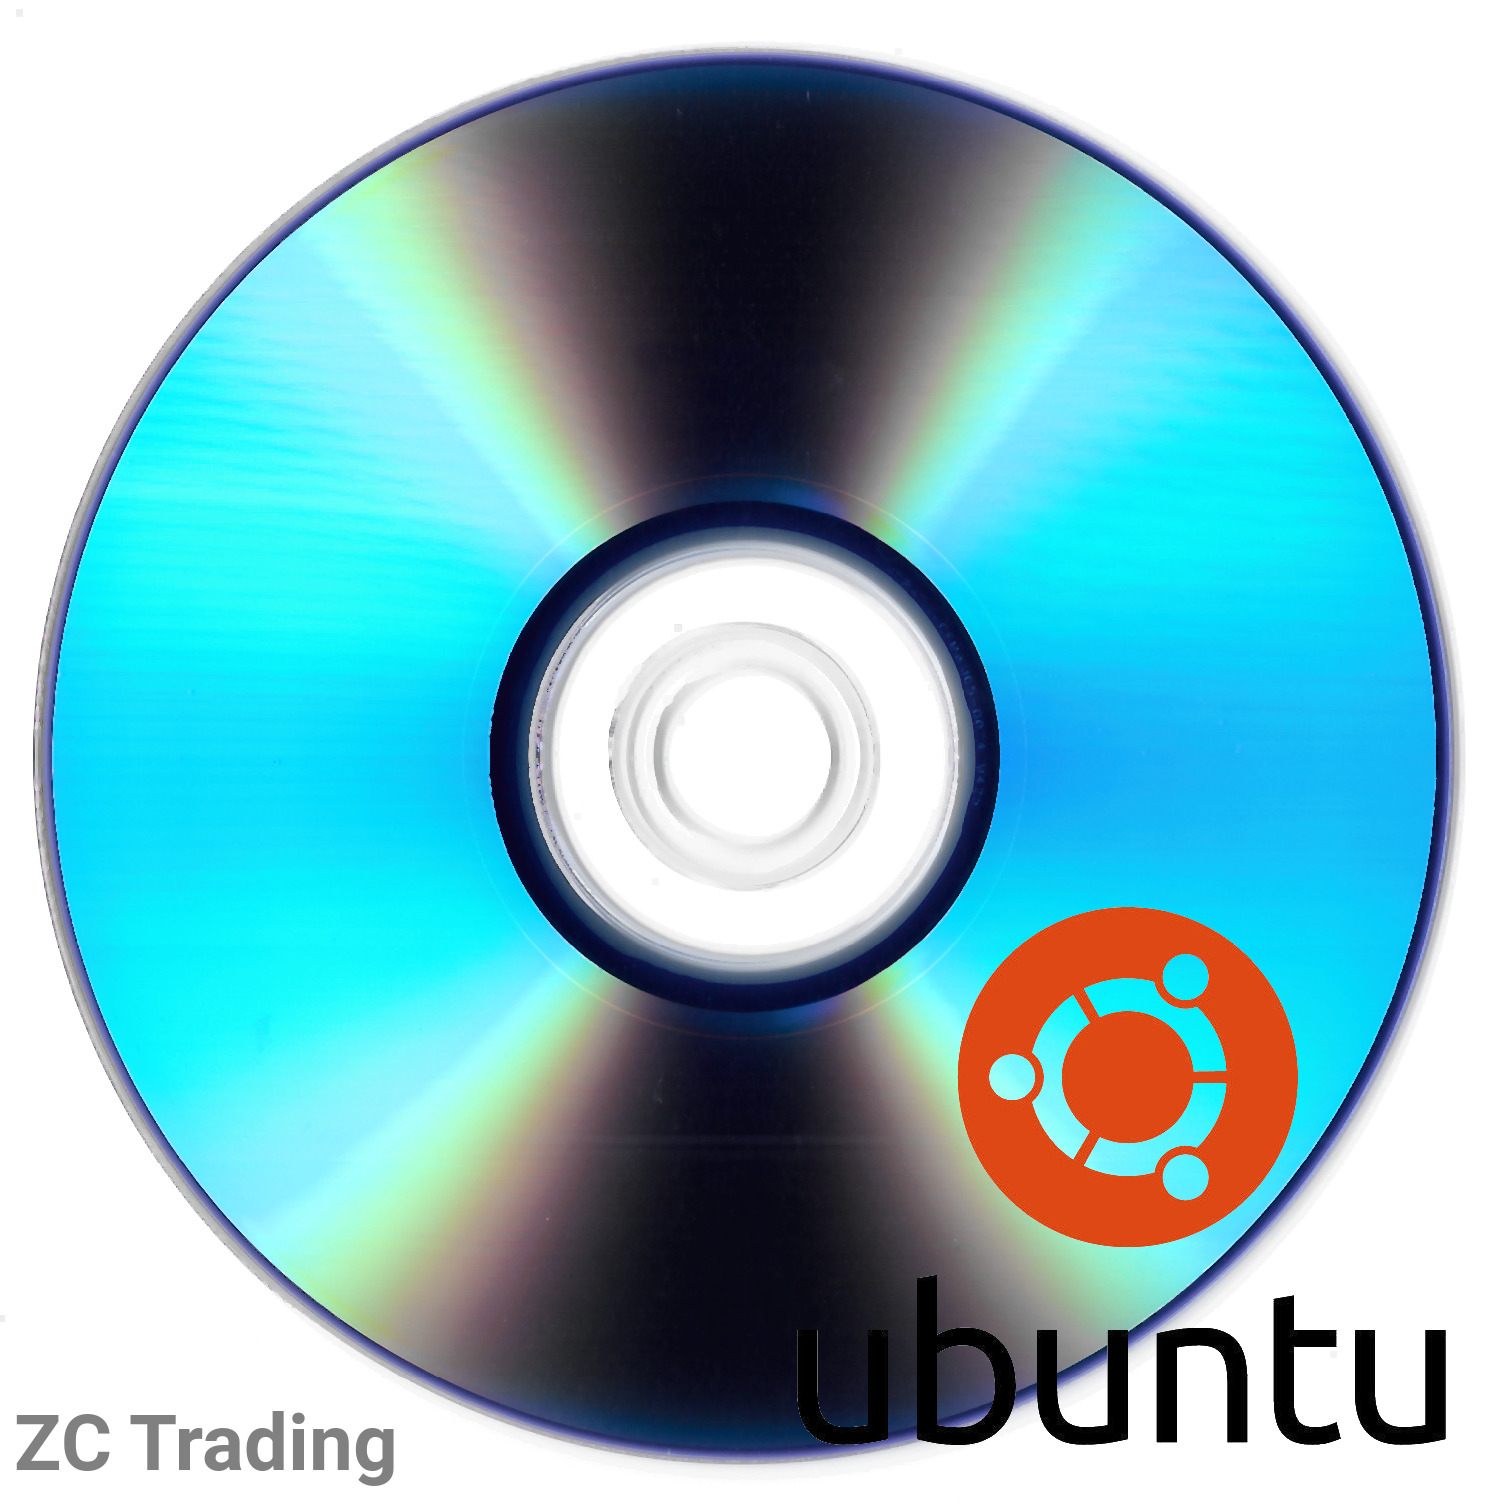 Ubuntu 20.04 Server Live CD DVD Bootable Install Installation Disc GNU Linux 64